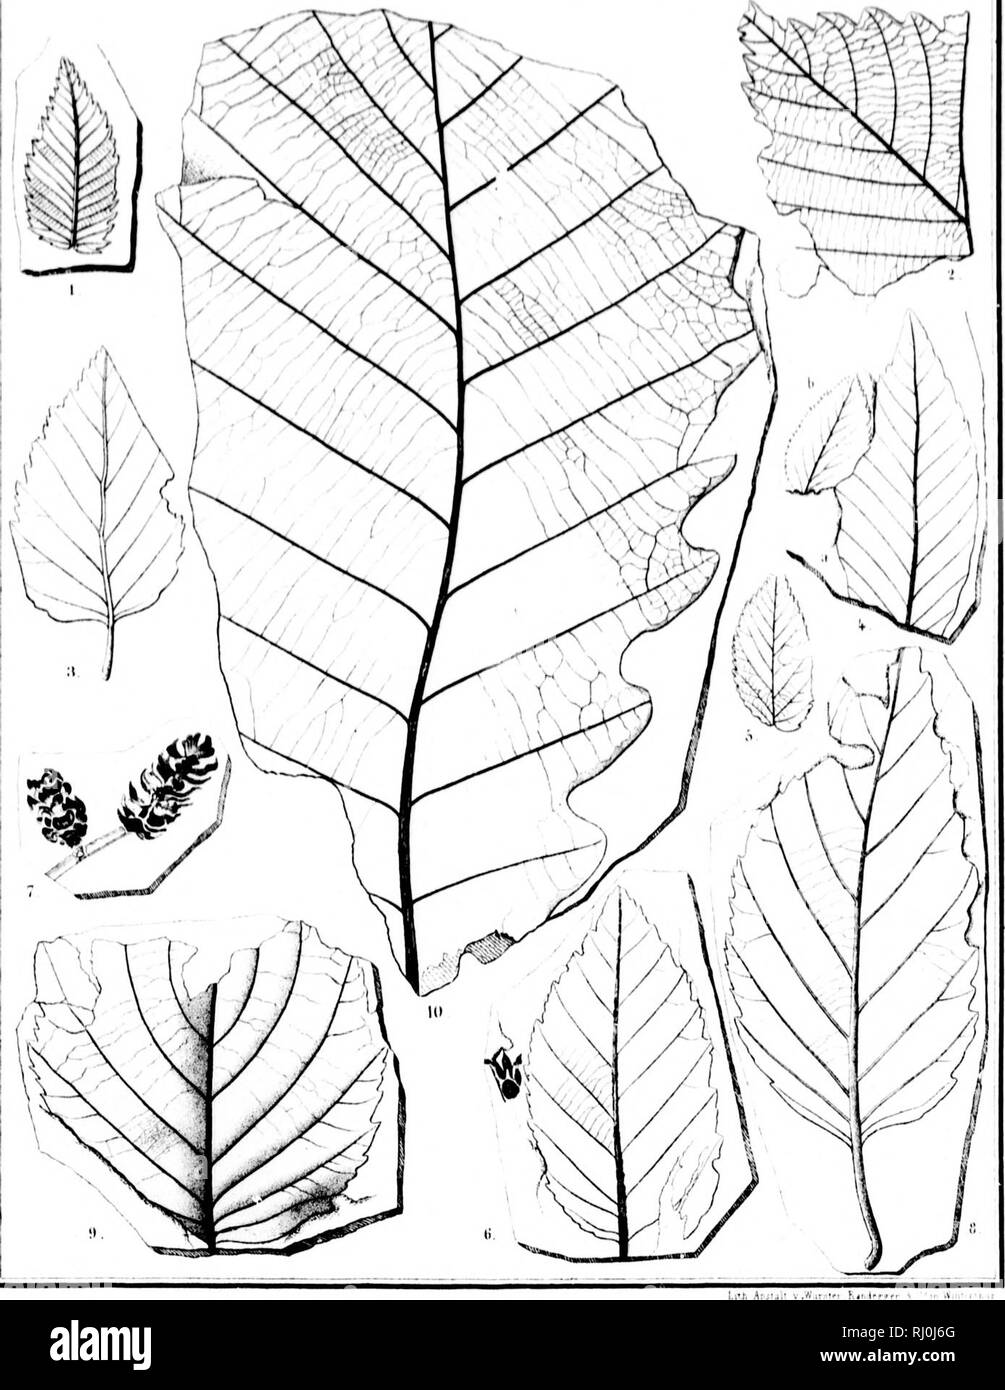 . Flora fossilis Alaskana [microform] = Fossile Flora von Alaska. Paleobotany; Paléobotanique. ||J tf.i i;l.l ^ilrlil Sll.il.,1' r MII N &quot; '? iK» ii..r liuiM .ii.iA r.ii&gt; y. Imu- 1 l'linils |)llinilfIAi;l '1 ri.llicr;! Timm 11 - 7 lioliil;! ii|i,&gt;..i ft lirliiLi ^-JMJHliruh.l !' .li'.iis KVli r-,lnini v.ii' III llmirii^ Kiiiiili|i&gt;|jiii.. Please note that these images are extracted from scanned page images that may have been digitally enhanced for readability - coloration and appearance of these illustrations may not perfectly resemble the original work.. Heer, Oswald, 1809-18 Stock Photo